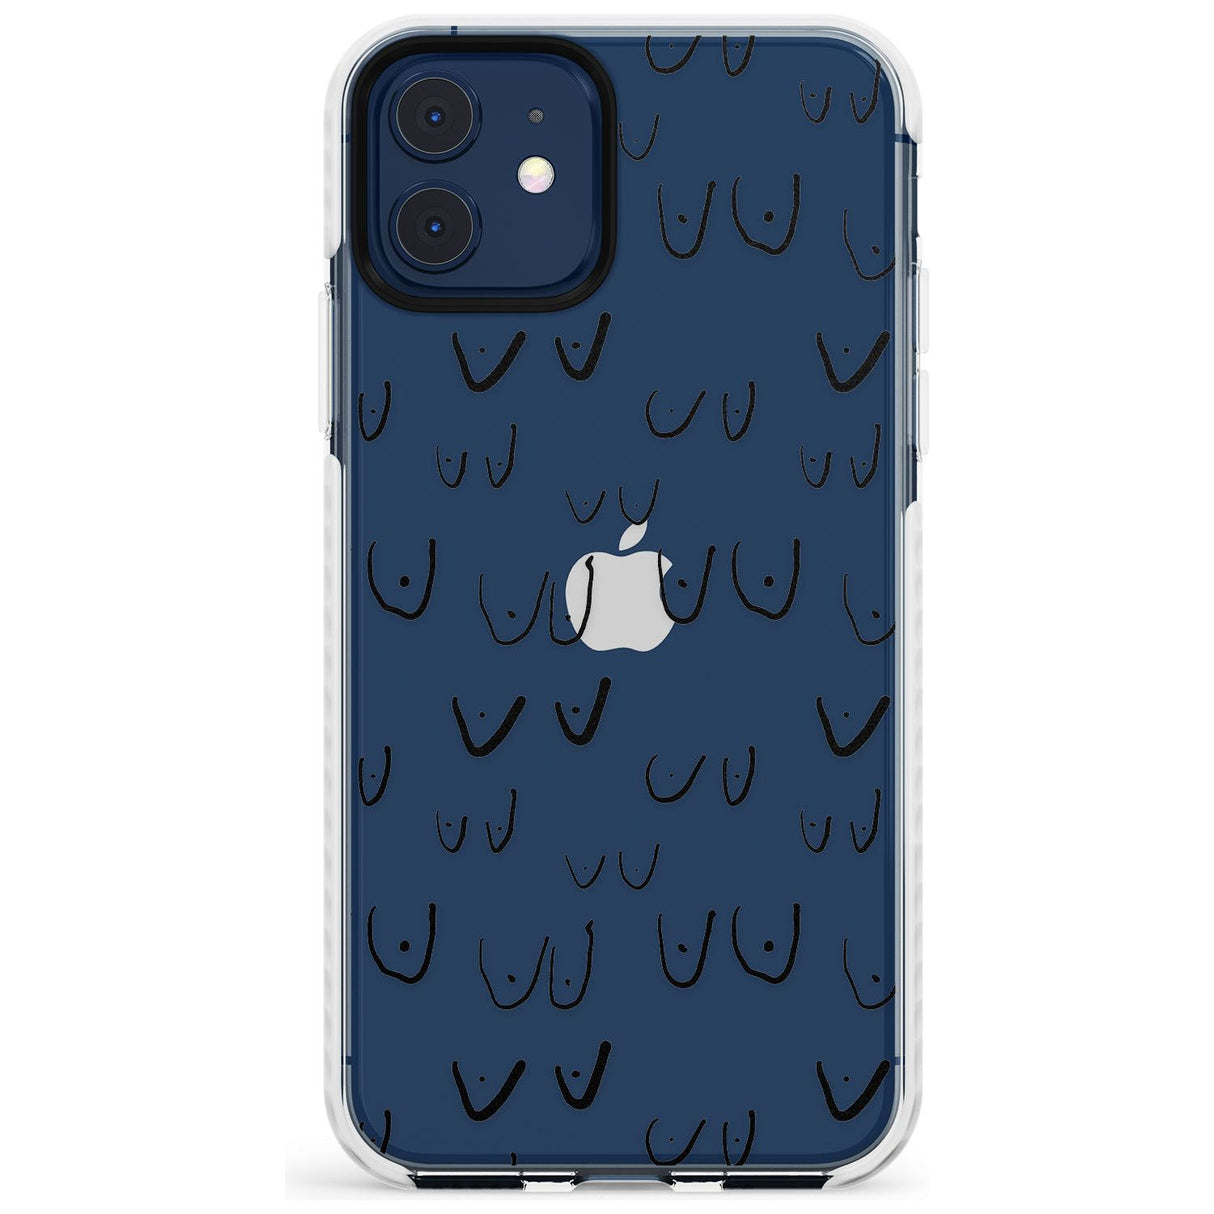 Boob Pattern (Black) Slim TPU Phone Case for iPhone 11